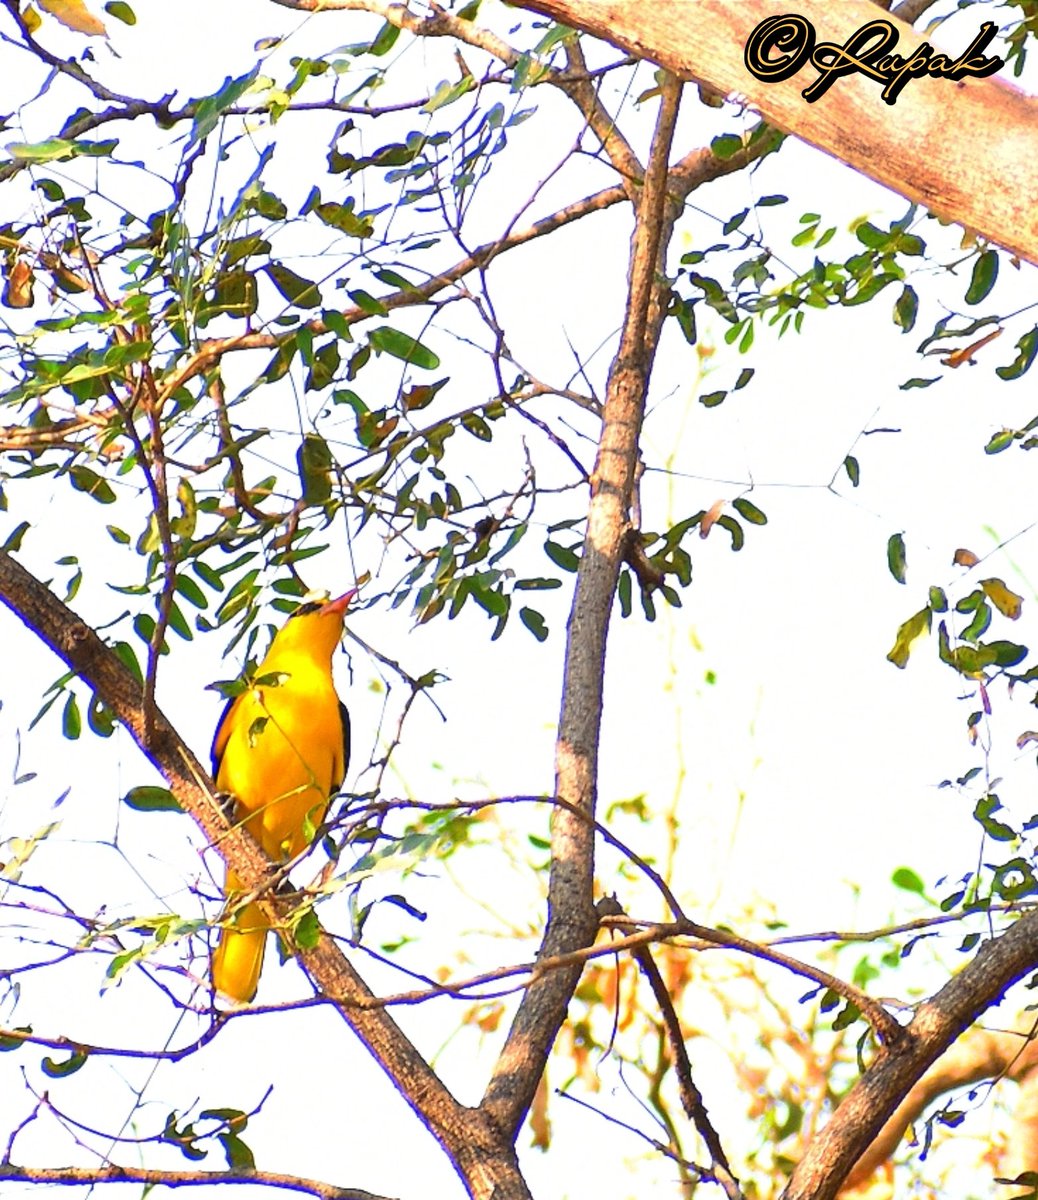 Golden Oriole✨
#Rupak_nature
_
#Birdland #feather_perfection #birdwatching #birdphotography #TwitterNaturePhotography #birds #NatureBeauty #Naturewalk #wildlifephotography #nature #WomeninScience #photography #photo #forest #bird #TwitterNatureCommunity @IndiAves @inbiodiversity